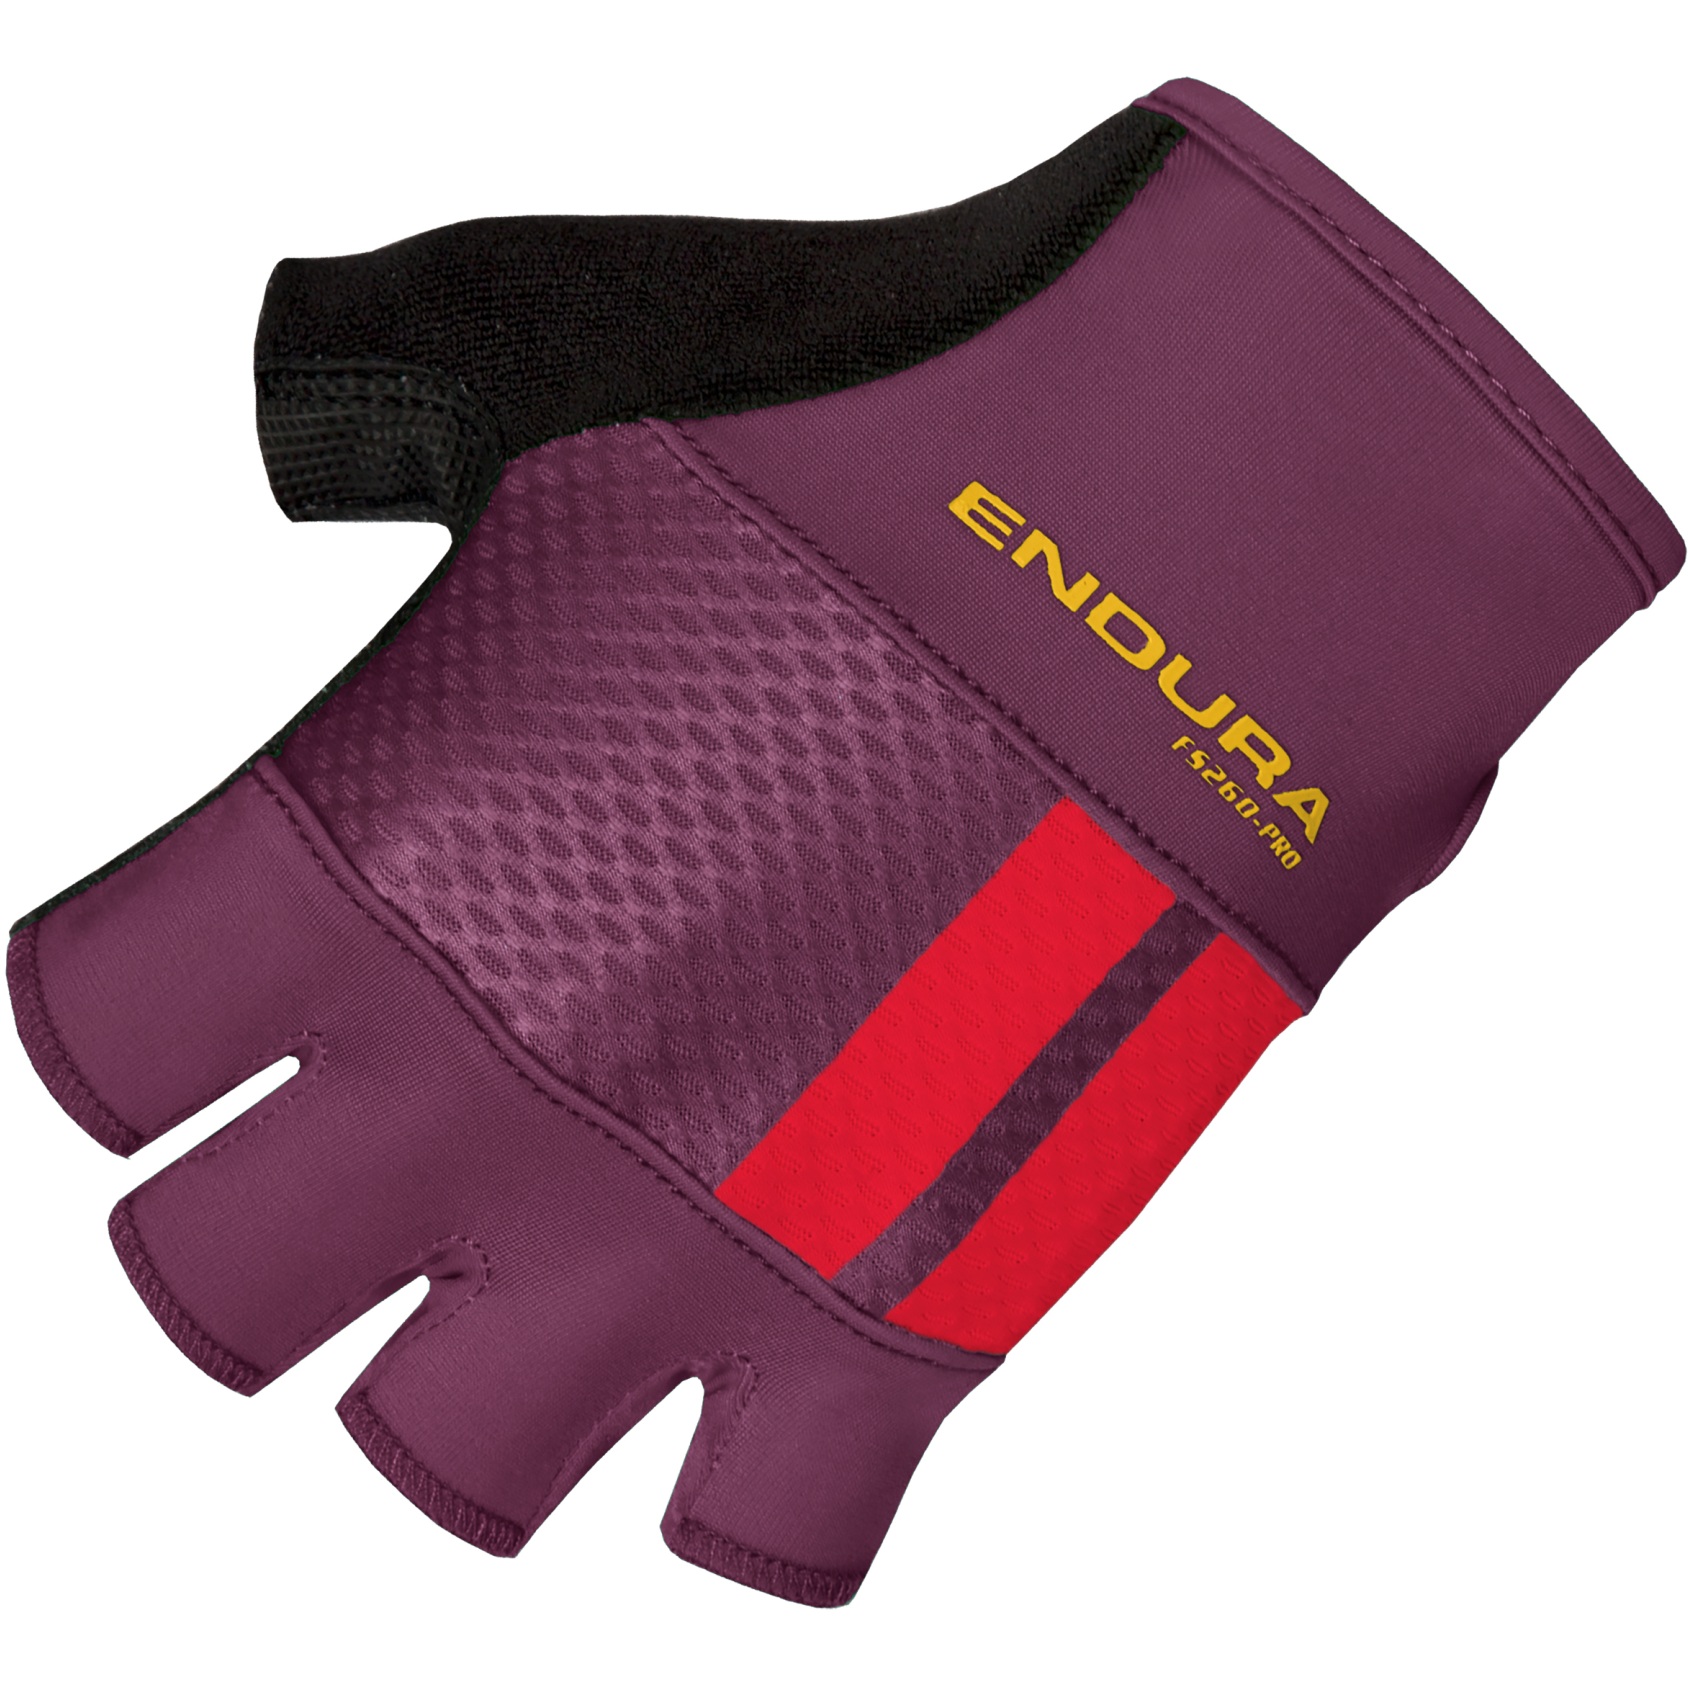 Produktbild von Endura FS260-Pro Aerogel II Damen Kurzfinger-Handschuhe - aubergine